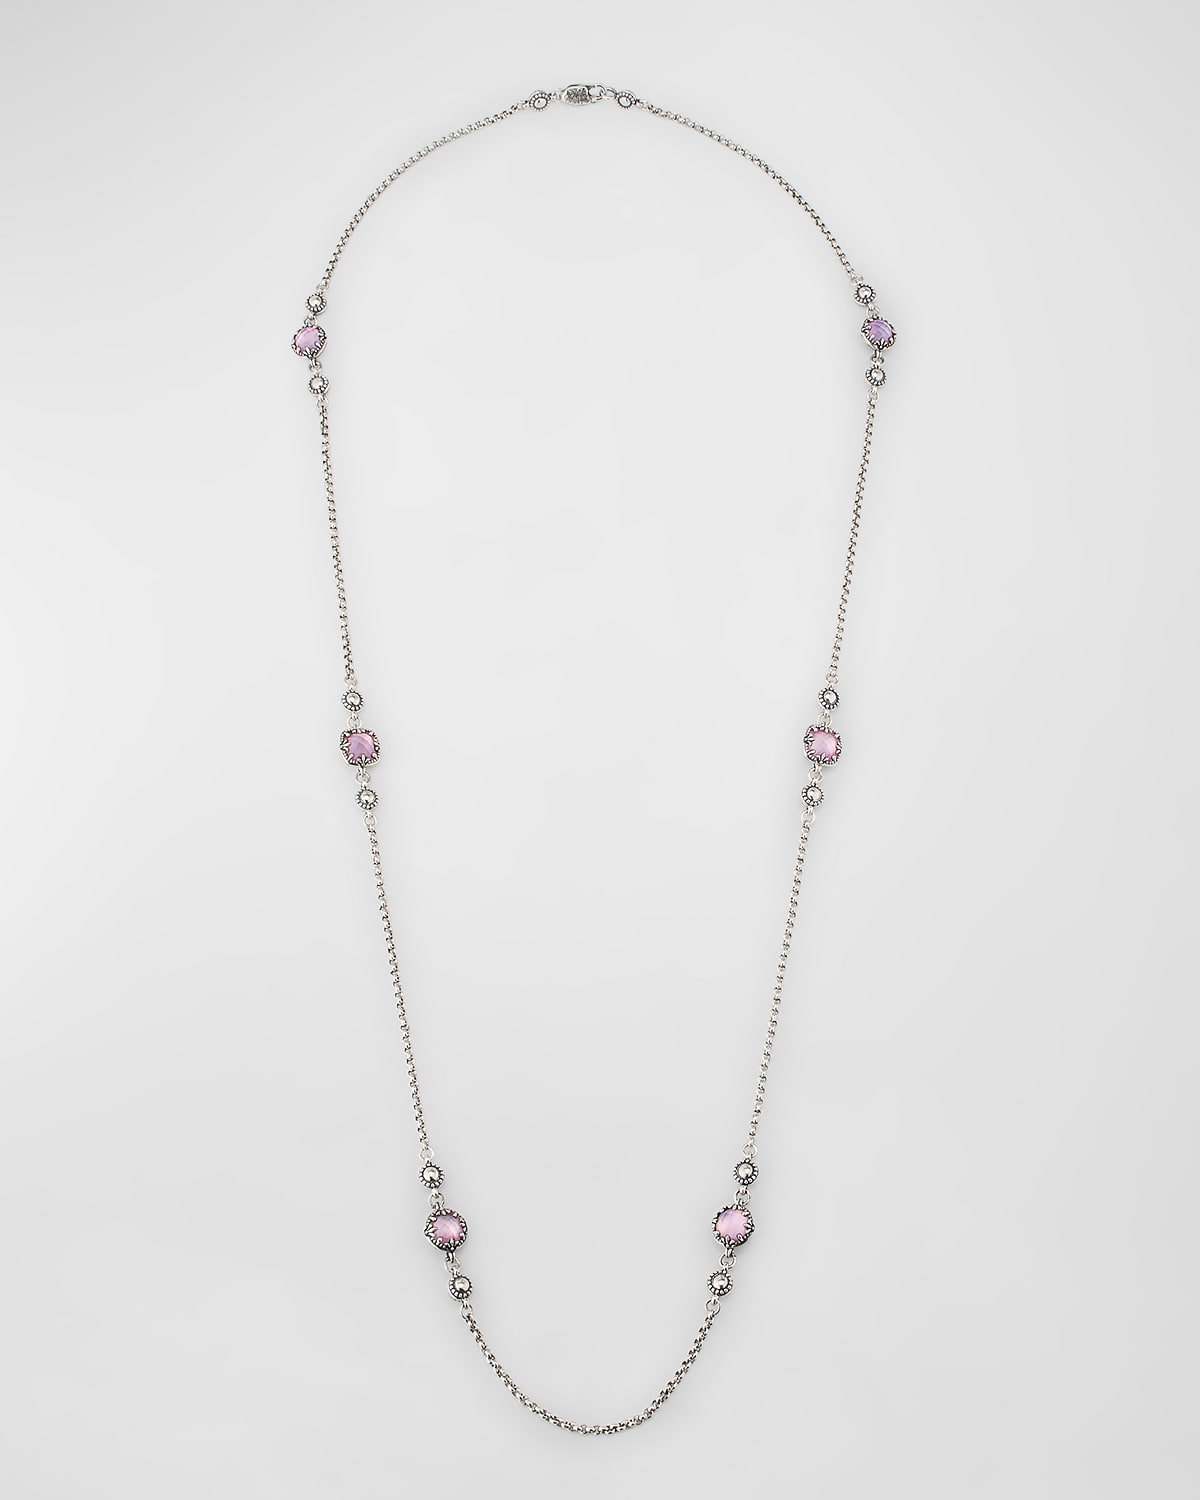 Gen K 2 Sterling Silver Mother-of-Pearl/Rock Crystal Necklace